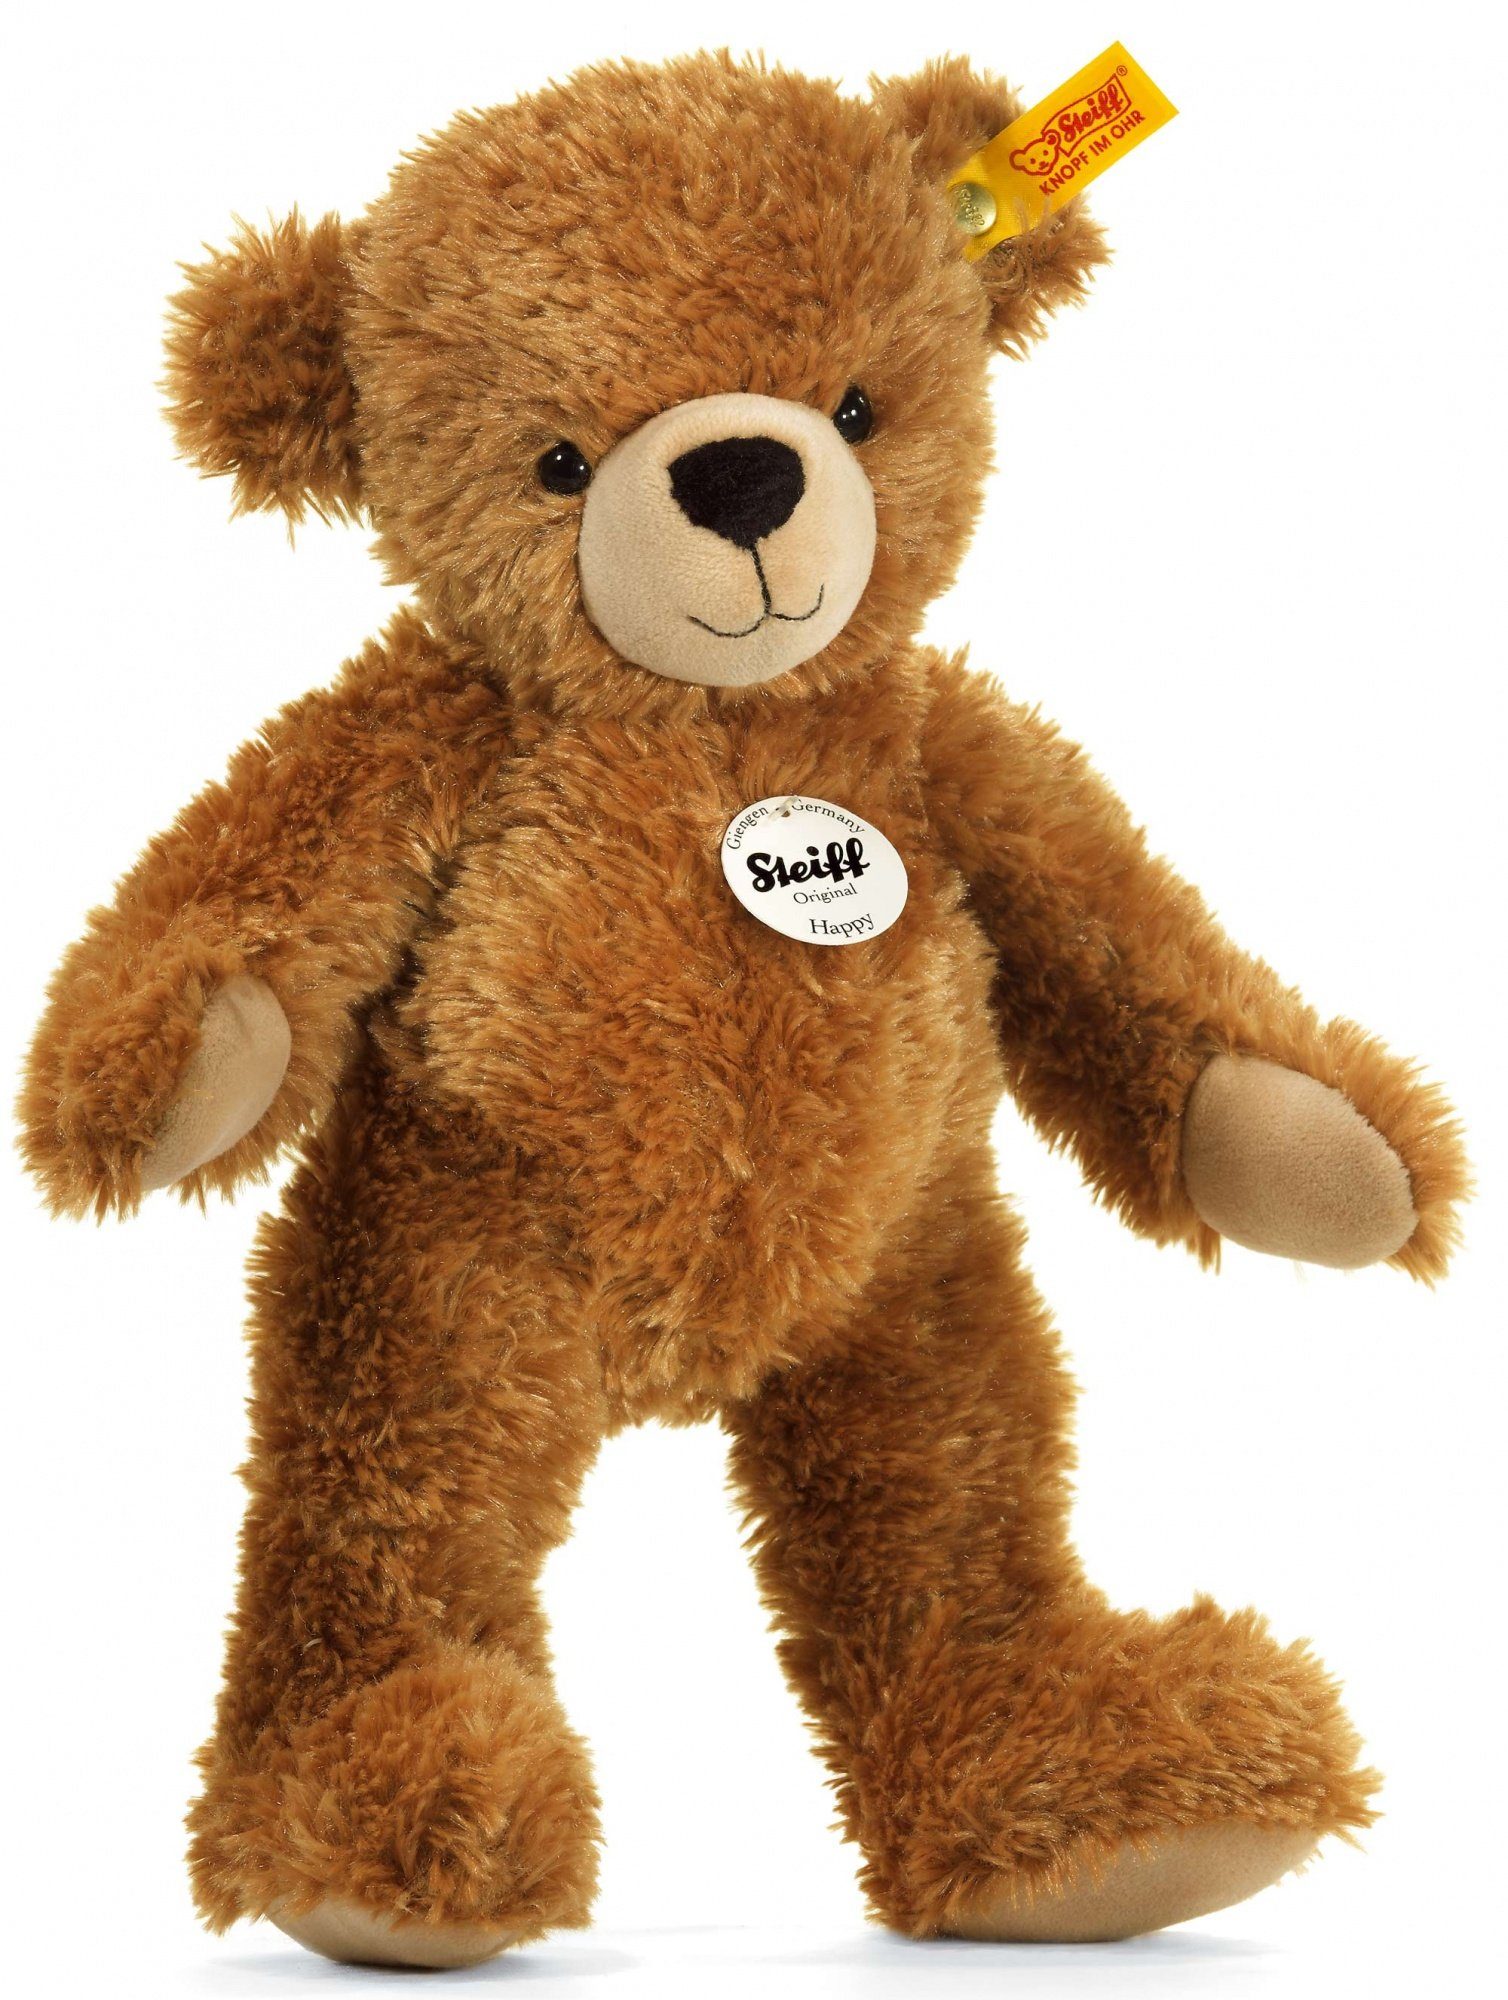 Steiff Kuscheltier Teddybär Happy braun 28cm 12662 Plüschteddybär